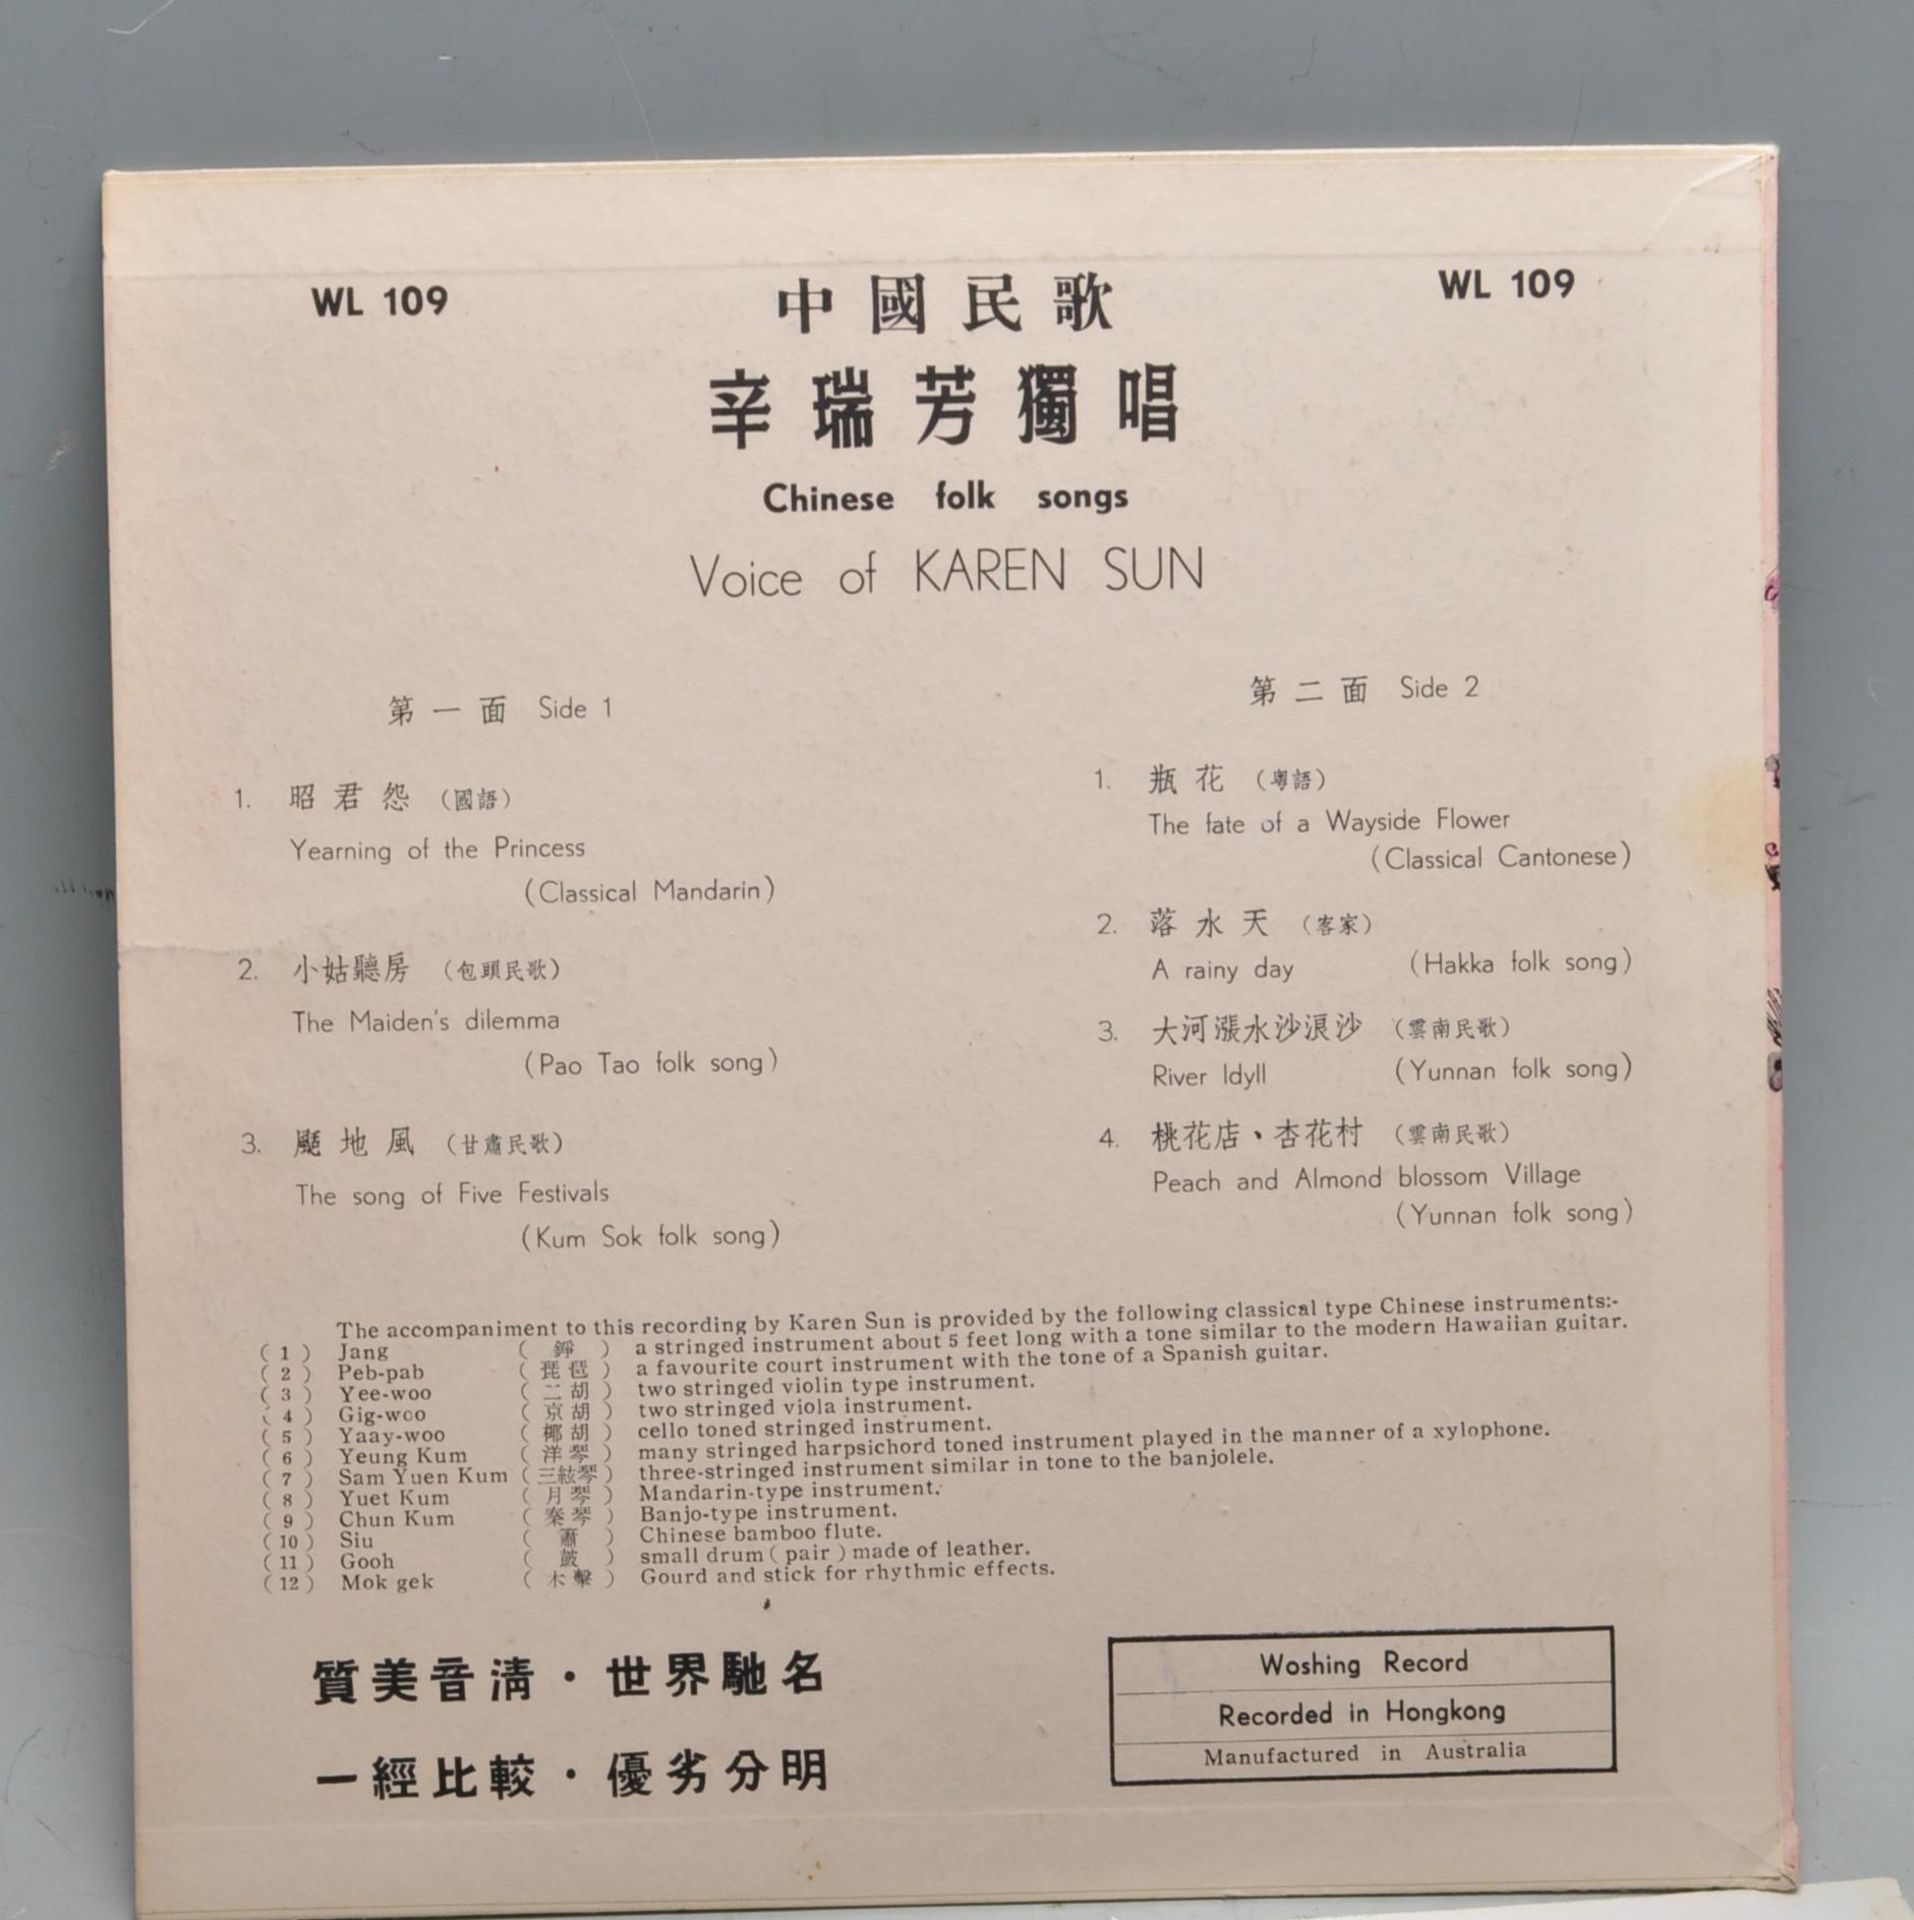 VINTAGE VINYL LP RECORD KAREN SUN - THE VOICE OF - Image 6 of 6